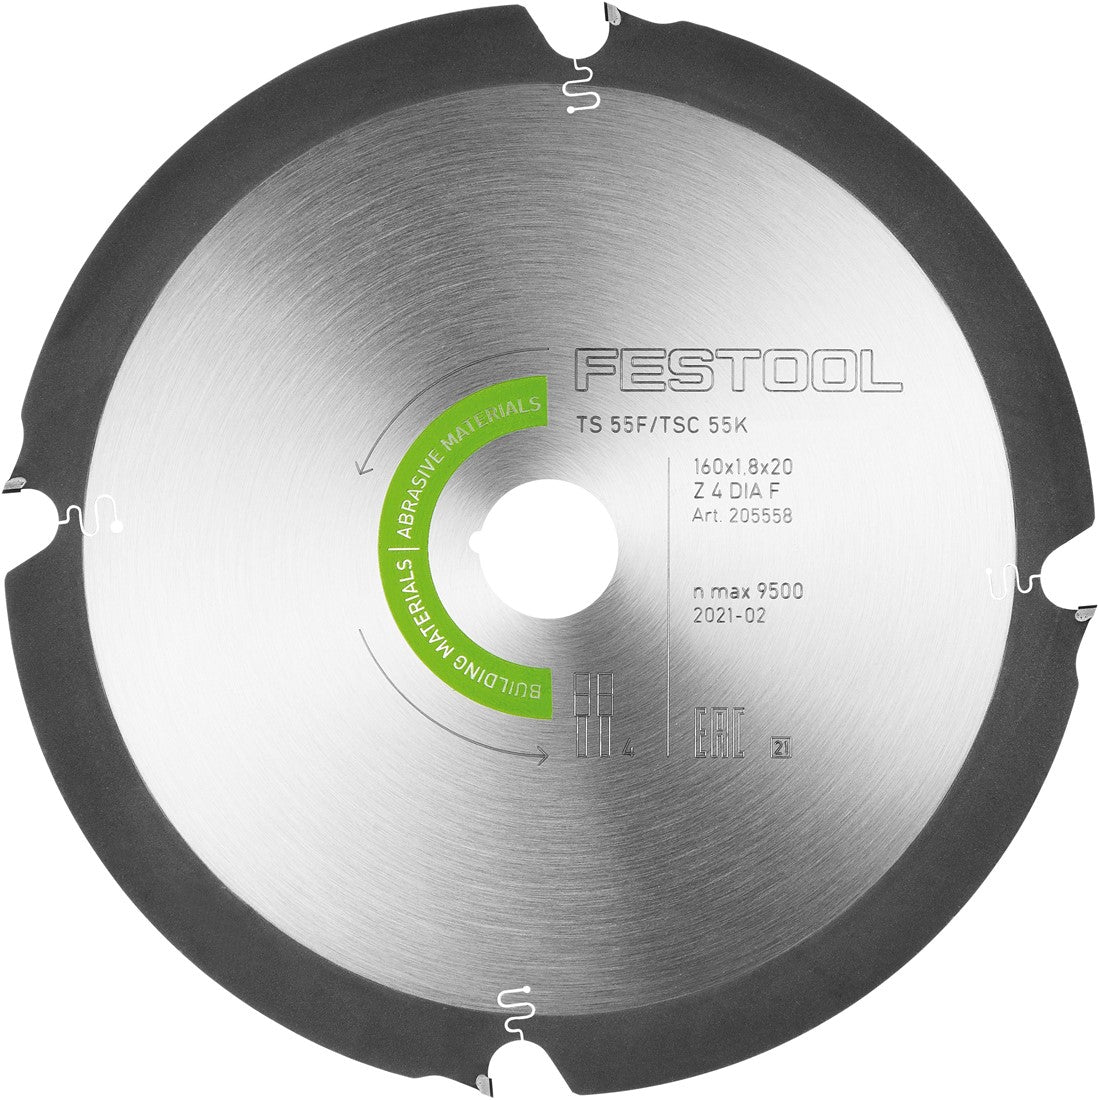 Festool Diamond circular saw blade ABRASIVE MATERIALS DIA 160x1,8x20 F4 205558 Power Tool Services